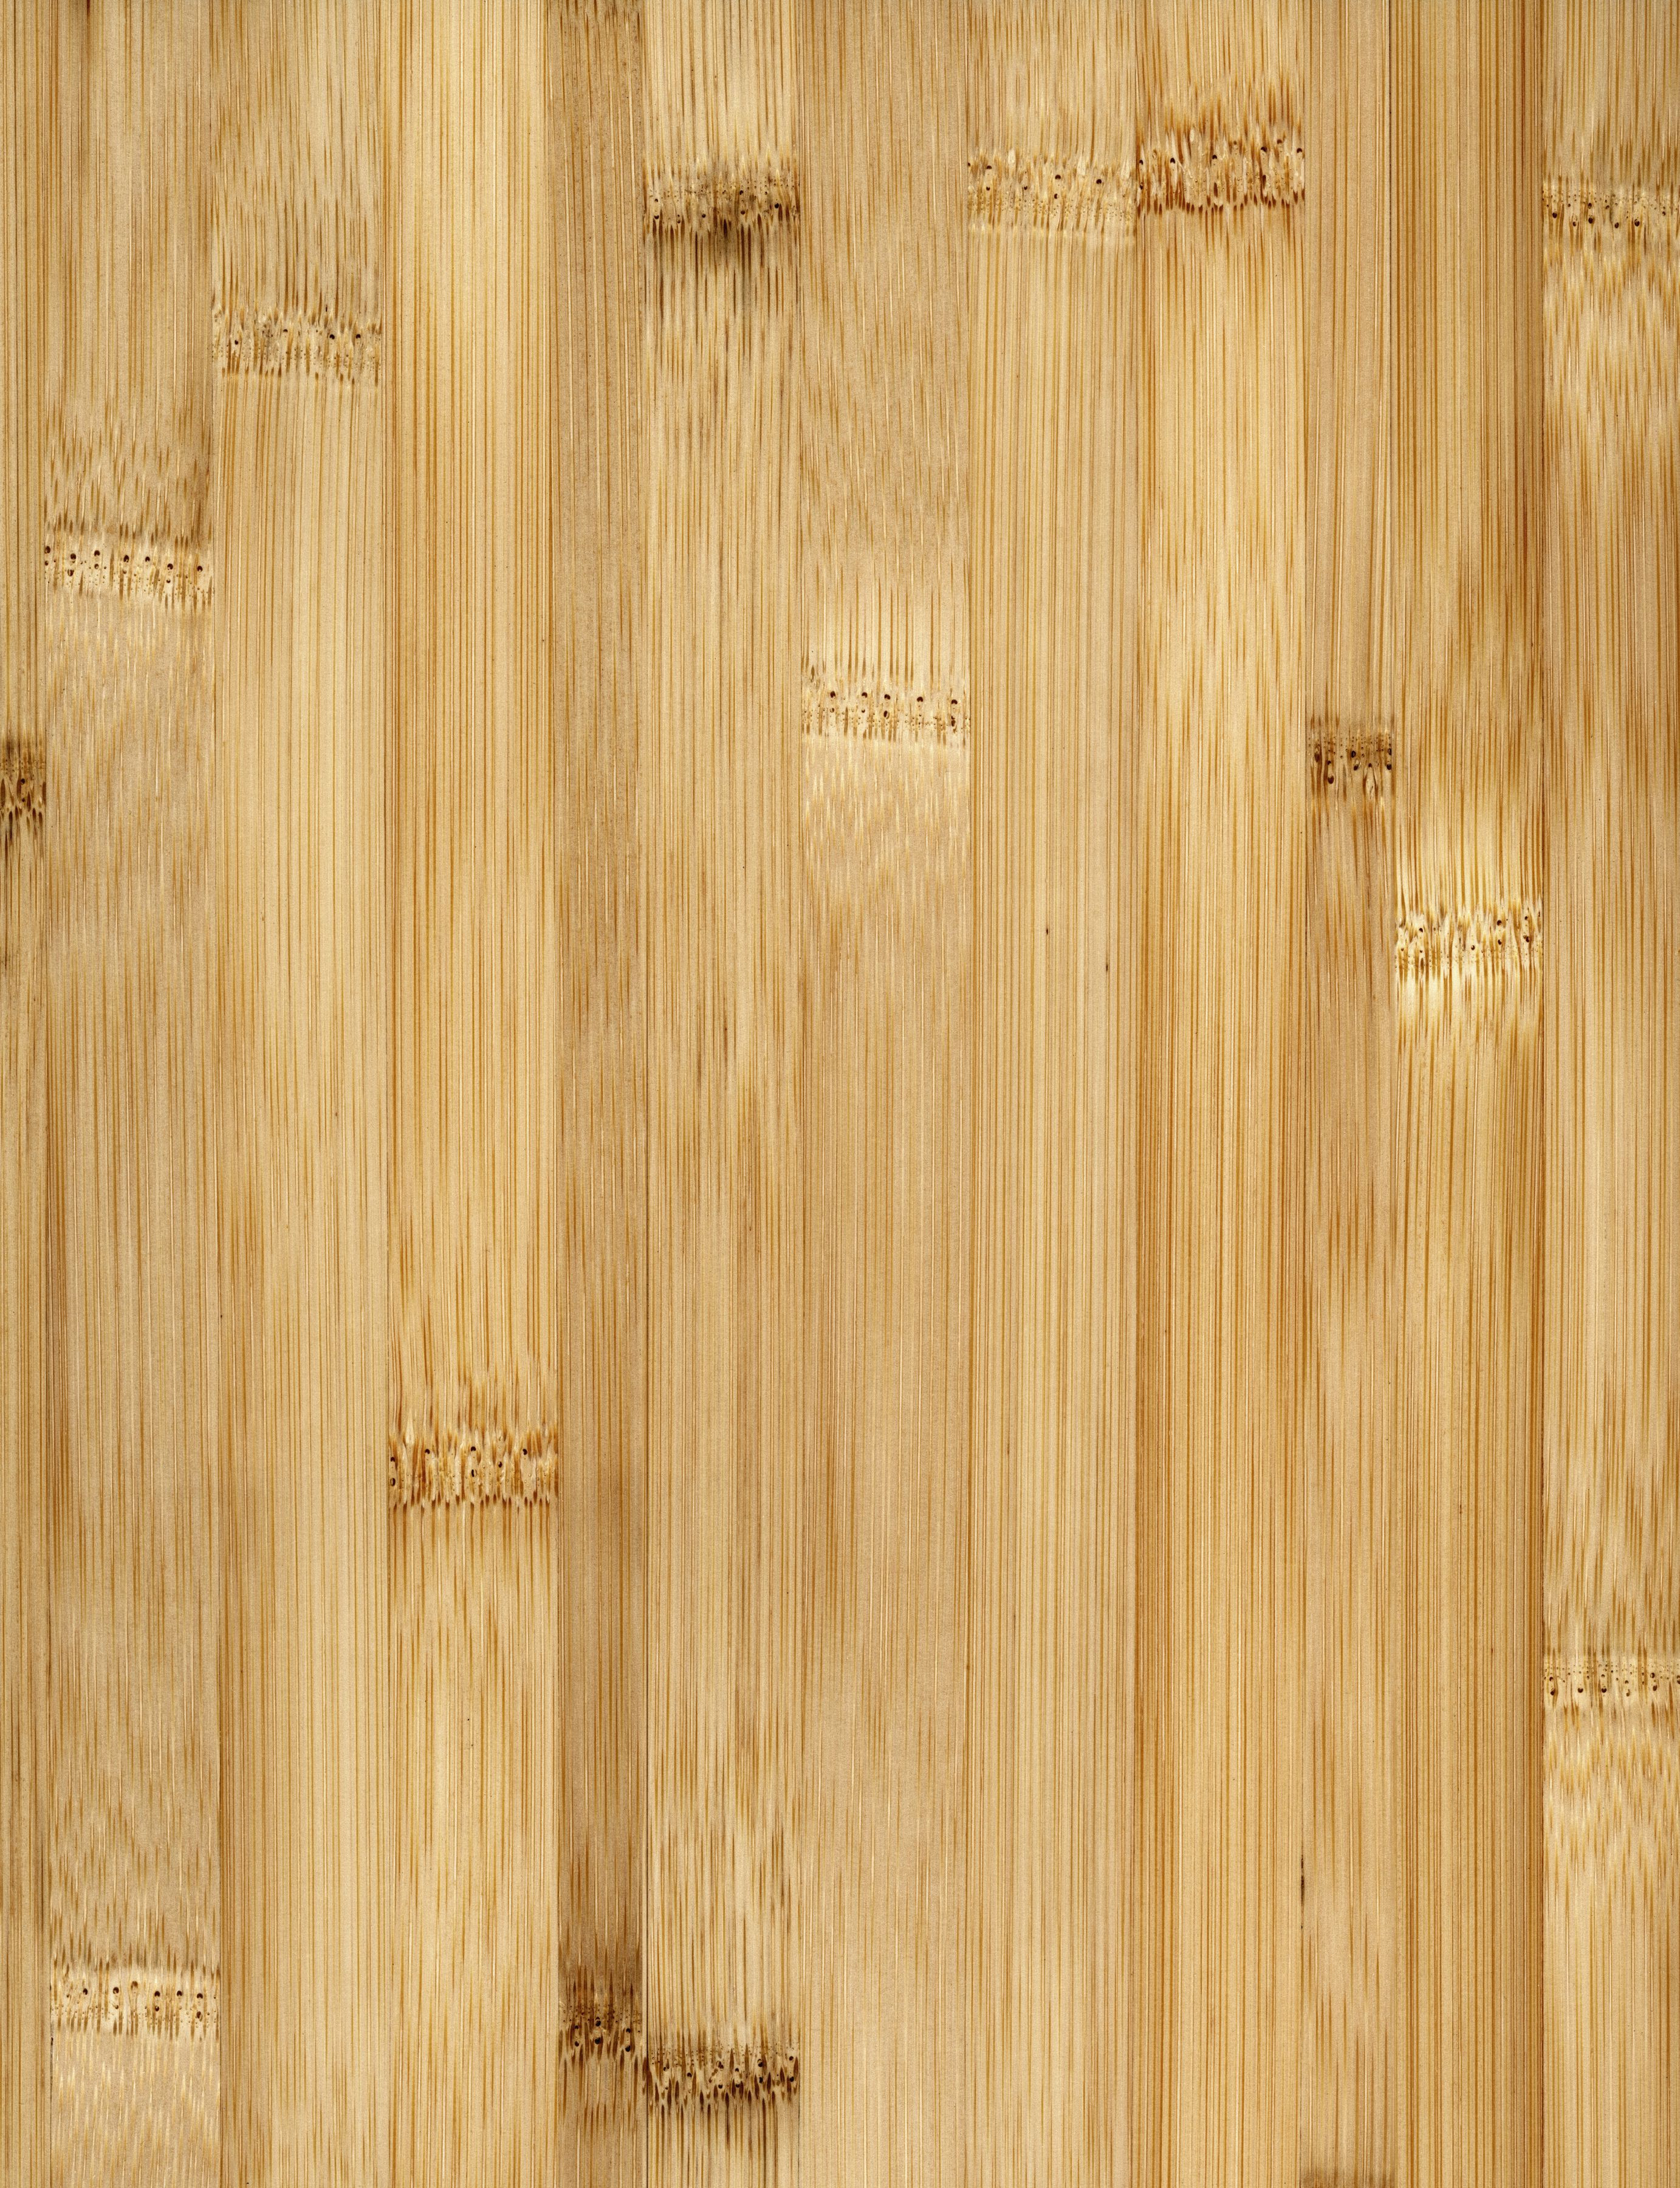 16 Fabulous Bamboo Hardwood Flooring Durability 2023 free download bamboo hardwood flooring durability of bamboo flooring the basics with regard to bamboo floor full frame 200266305 001 588805c03df78c2ccdd4c706